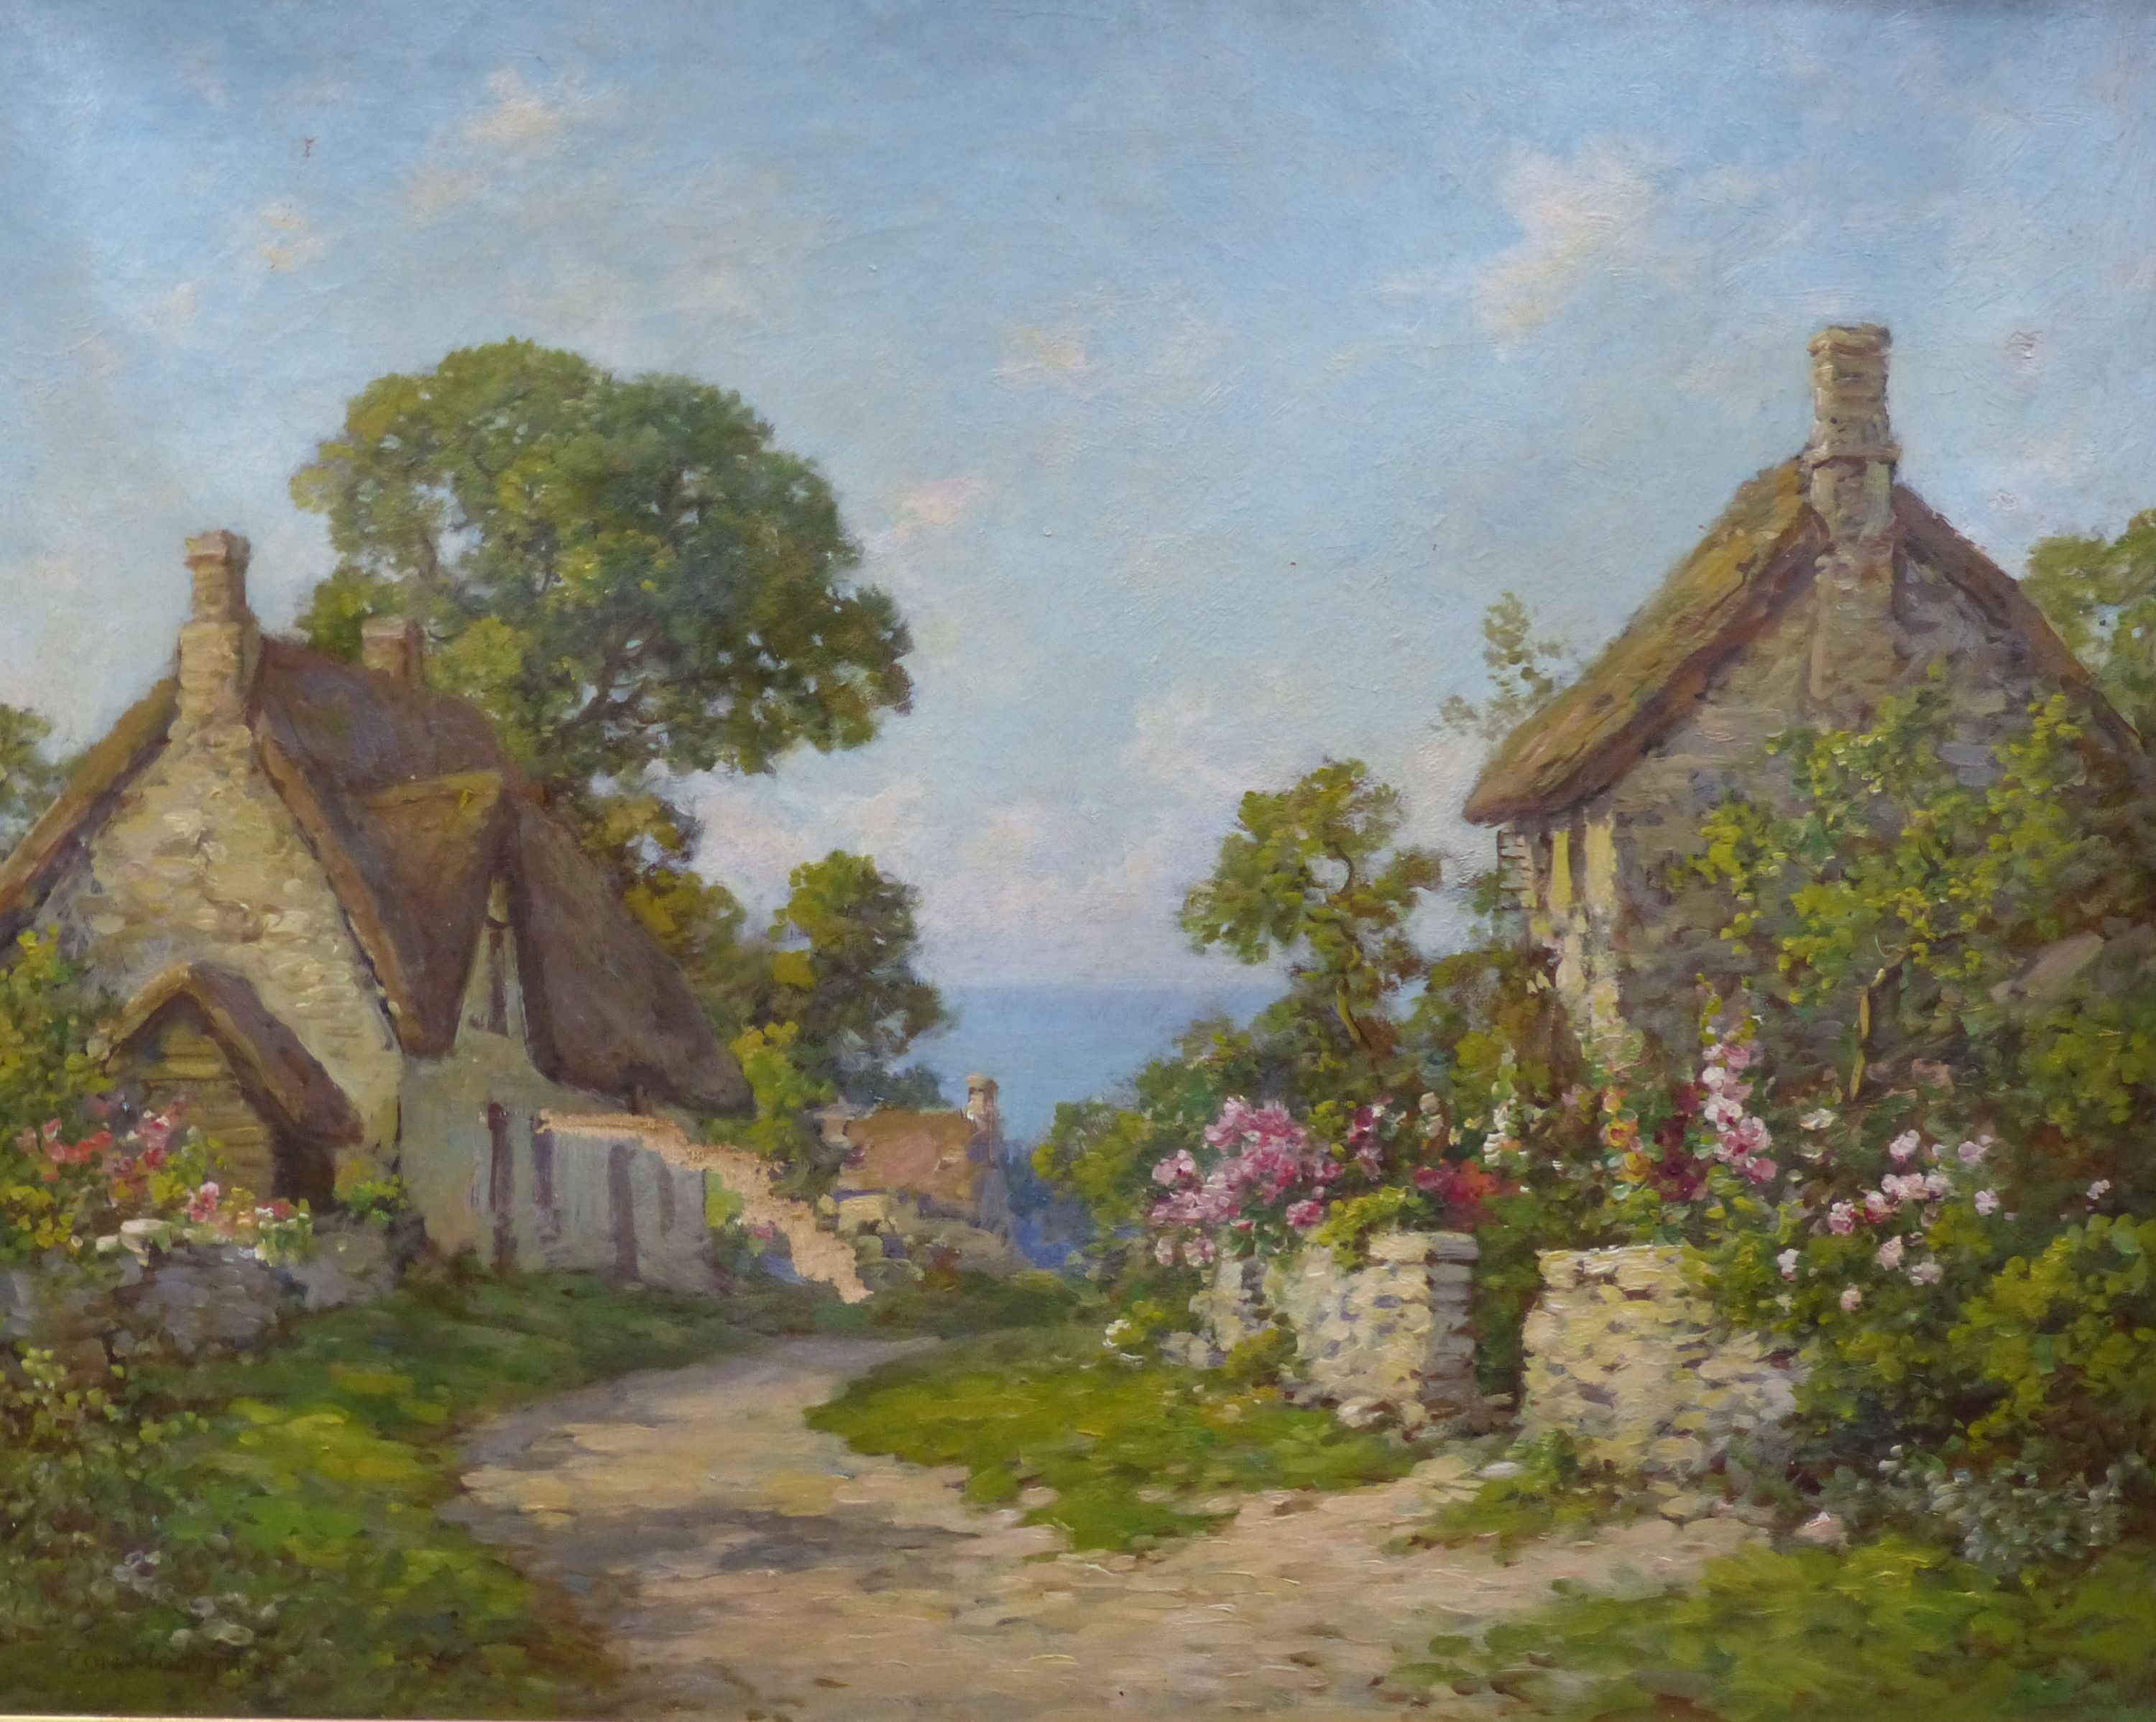 Tom Mostyn (1864-1930), oil on canvas, Coastal cottages, signed, 55 x 70cm